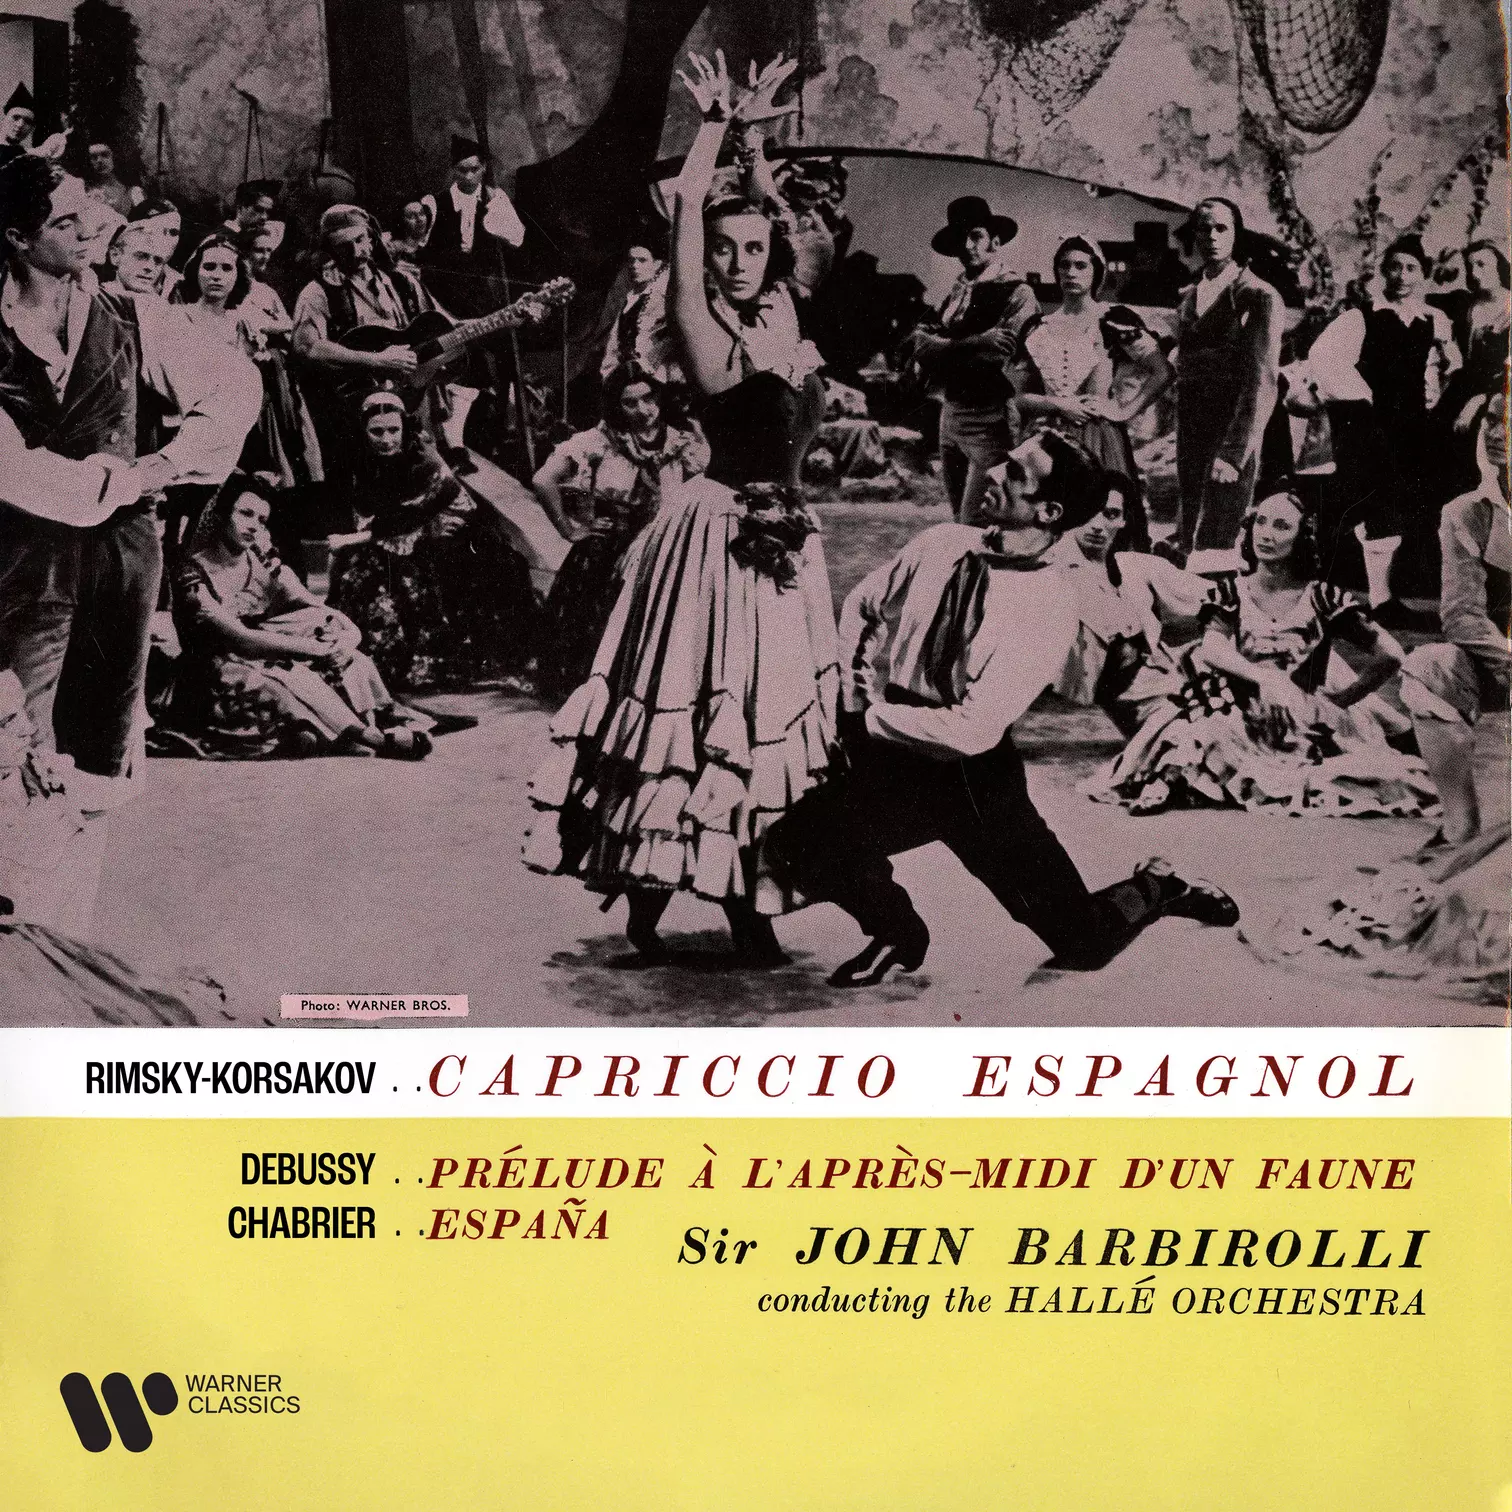 Rimsky-Korsakov: Capriccio espagnol - Debussy: Prélude à l’après-midi d’un faune - Chabrier: España